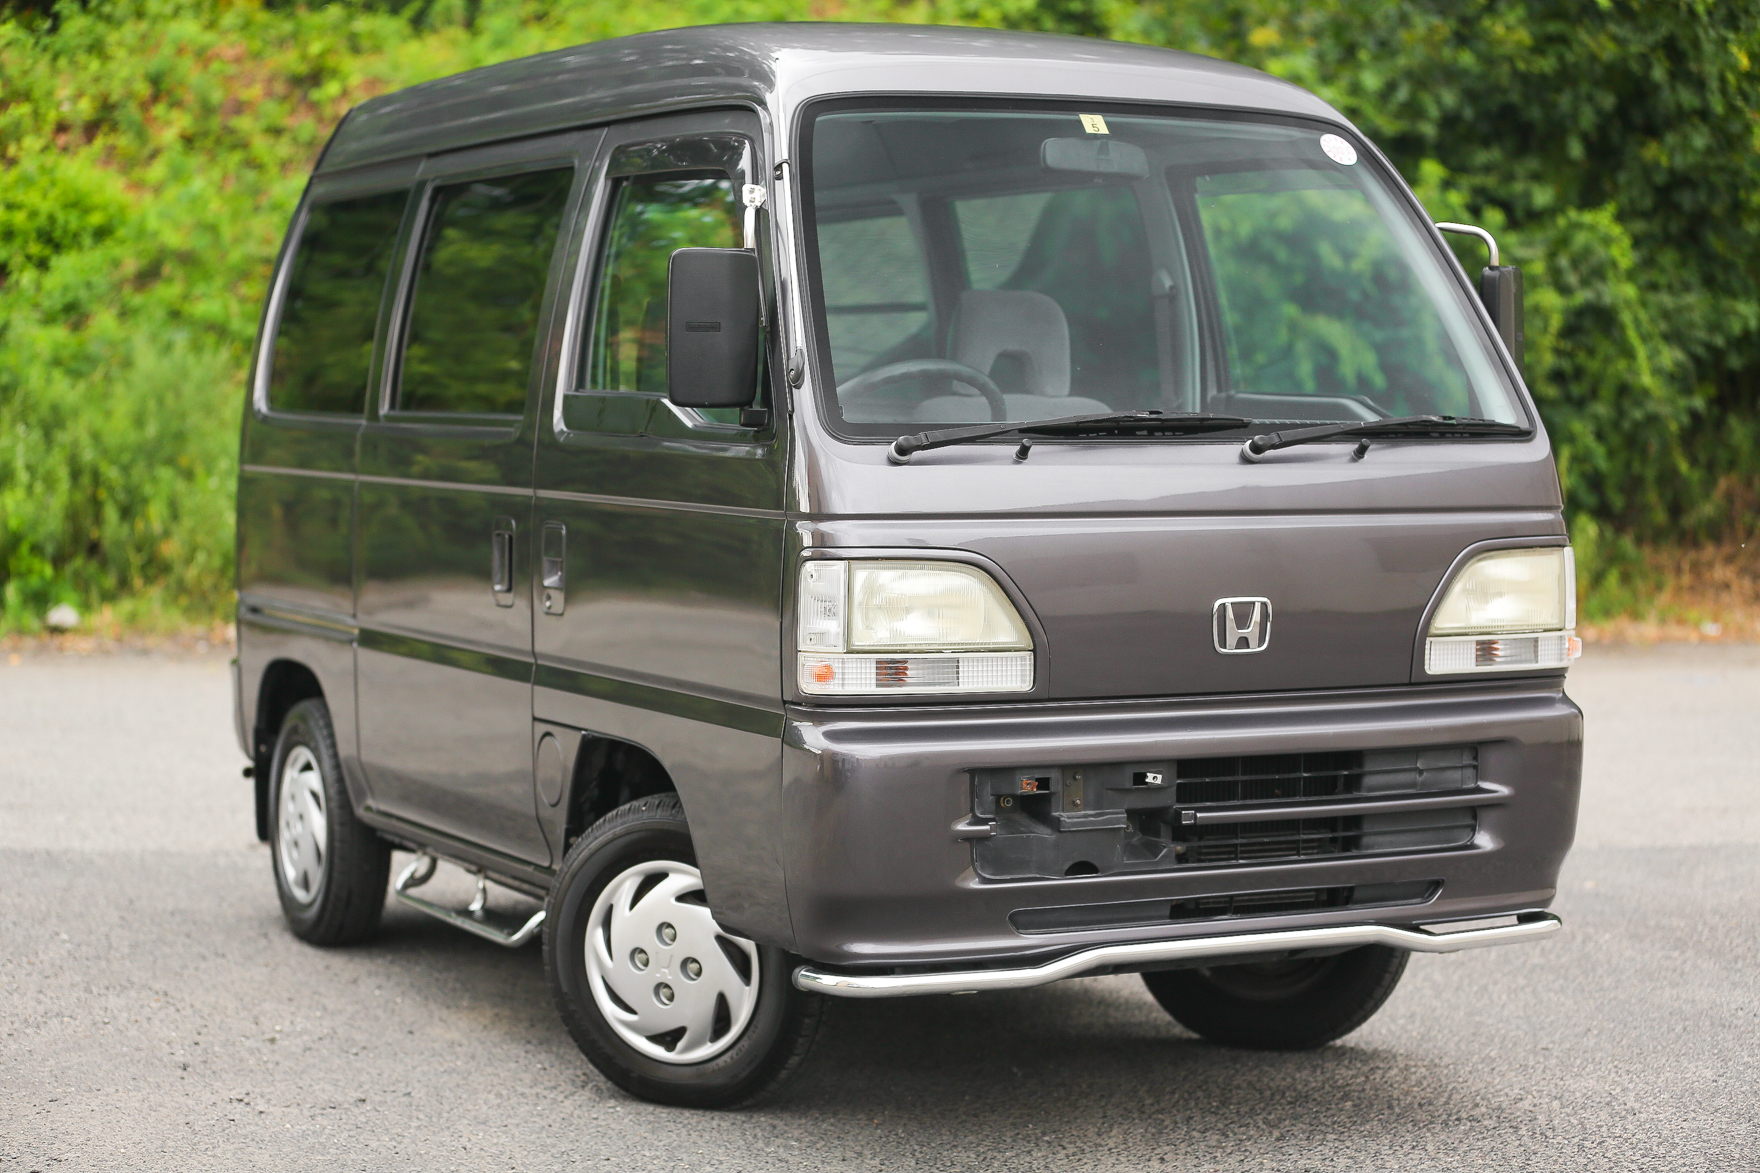 1996 Honda Street Van - $12,000